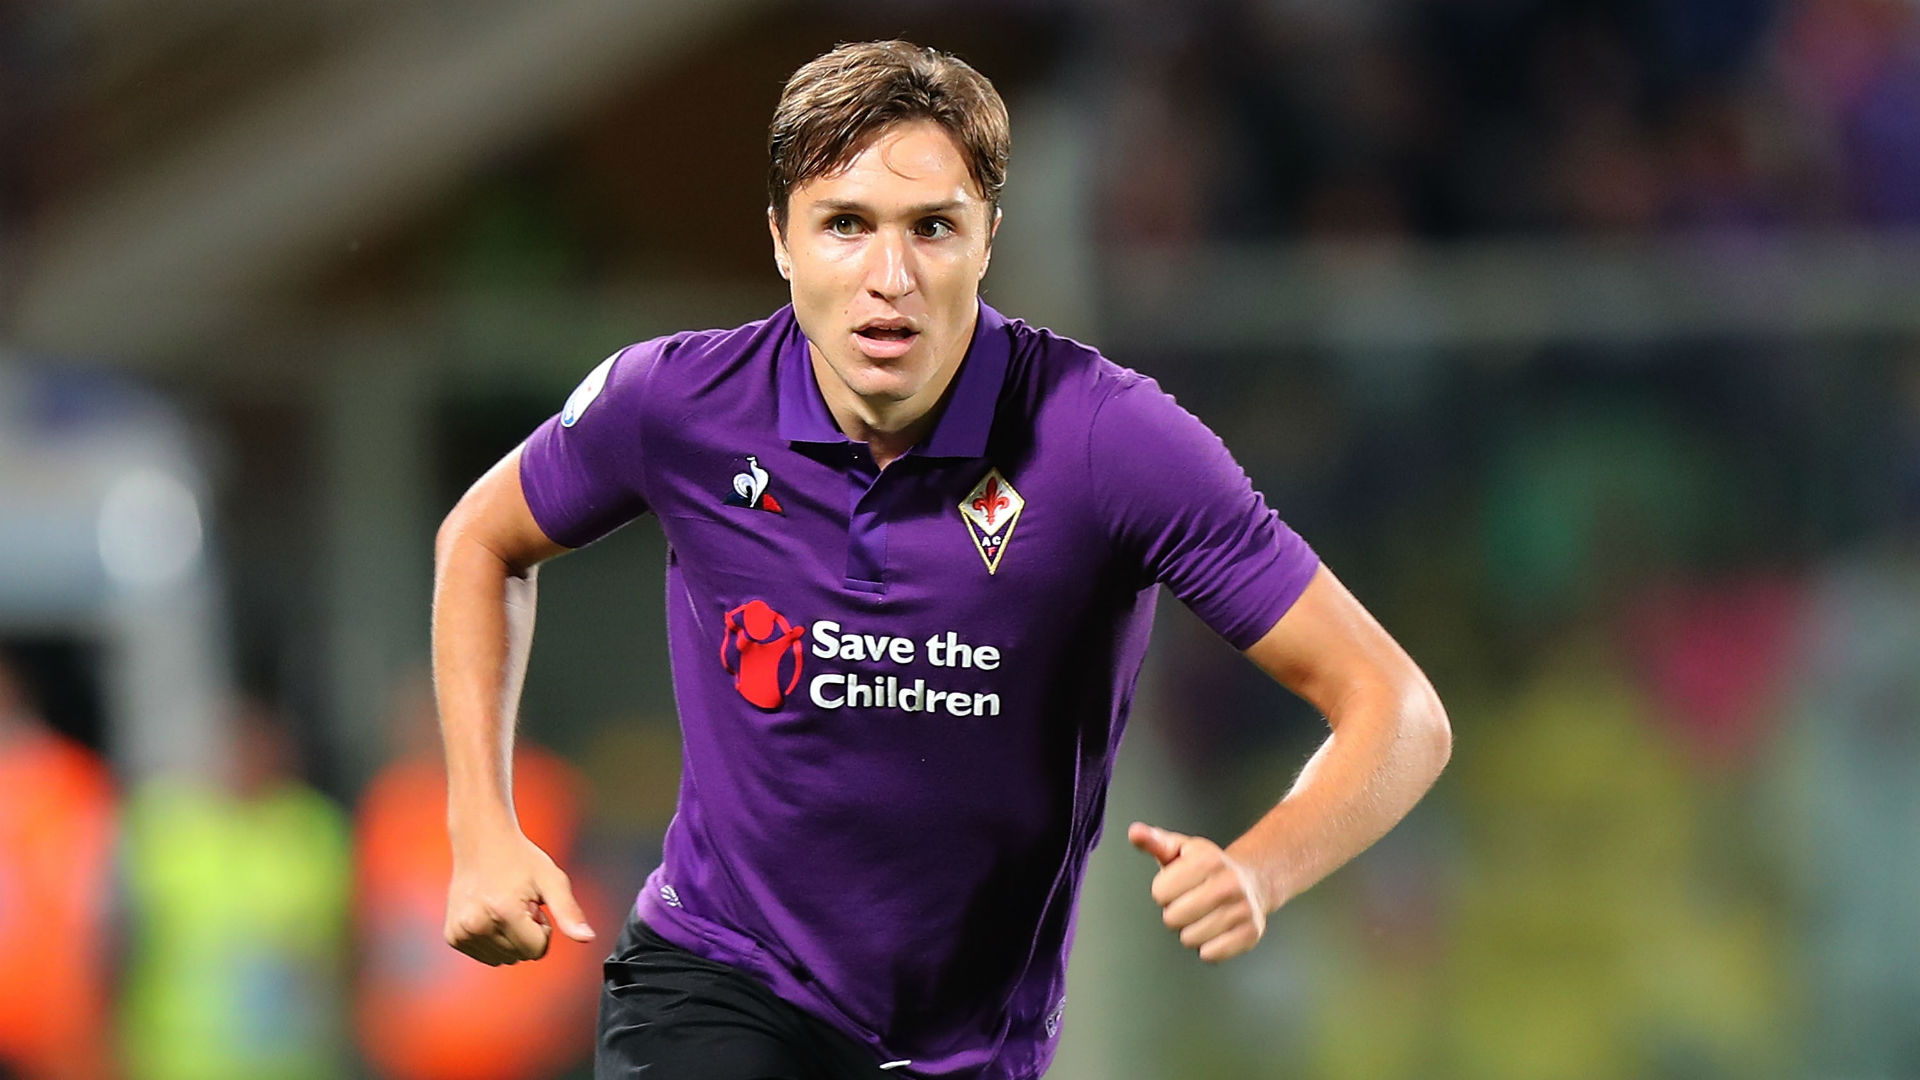 Fiorentina 0-1 Torino: Match report and highlights - Viola Nation